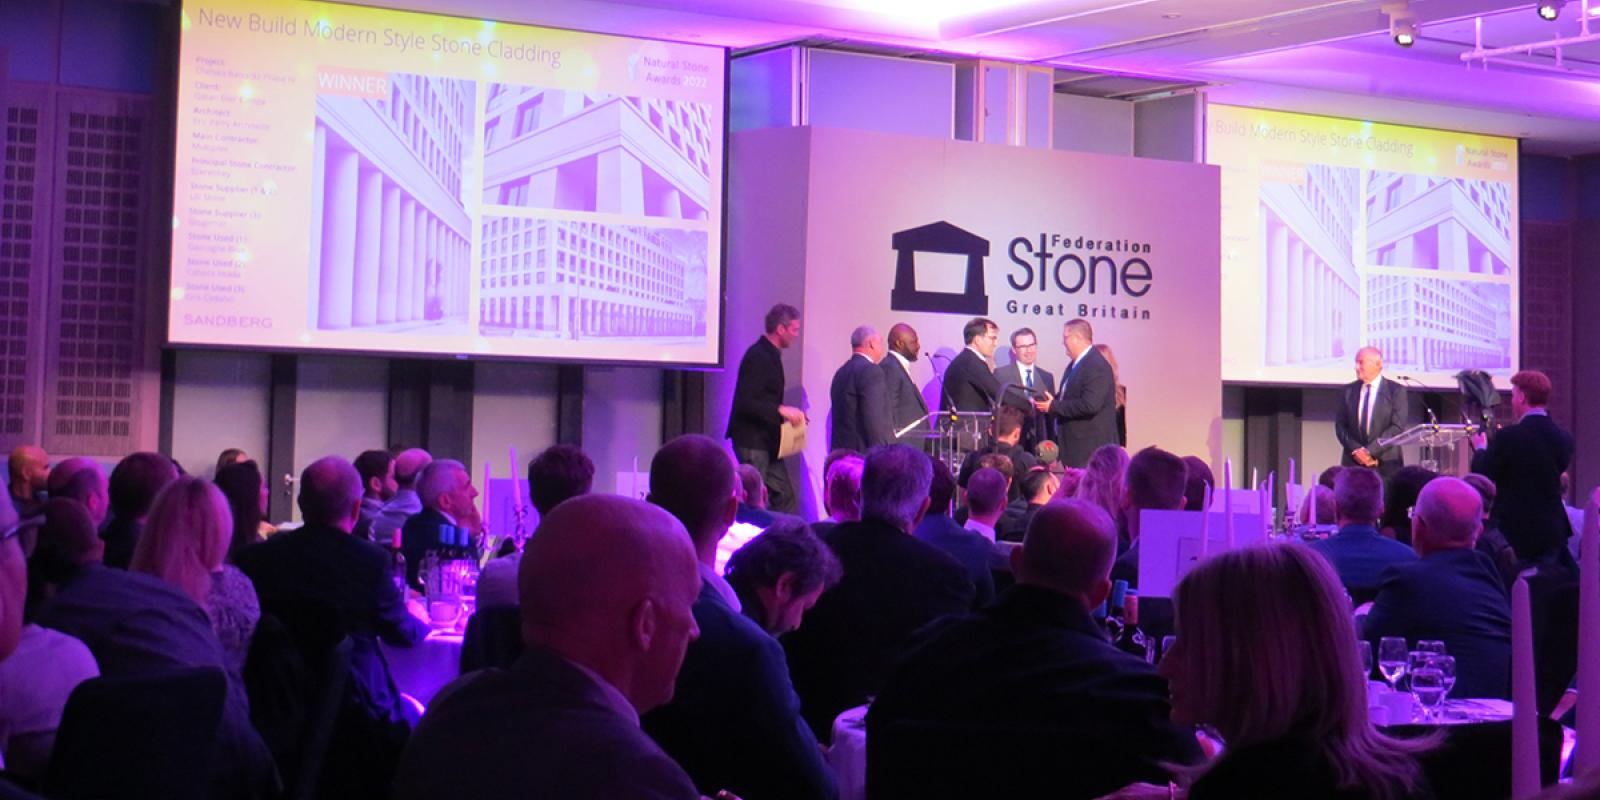 Stone Award winners